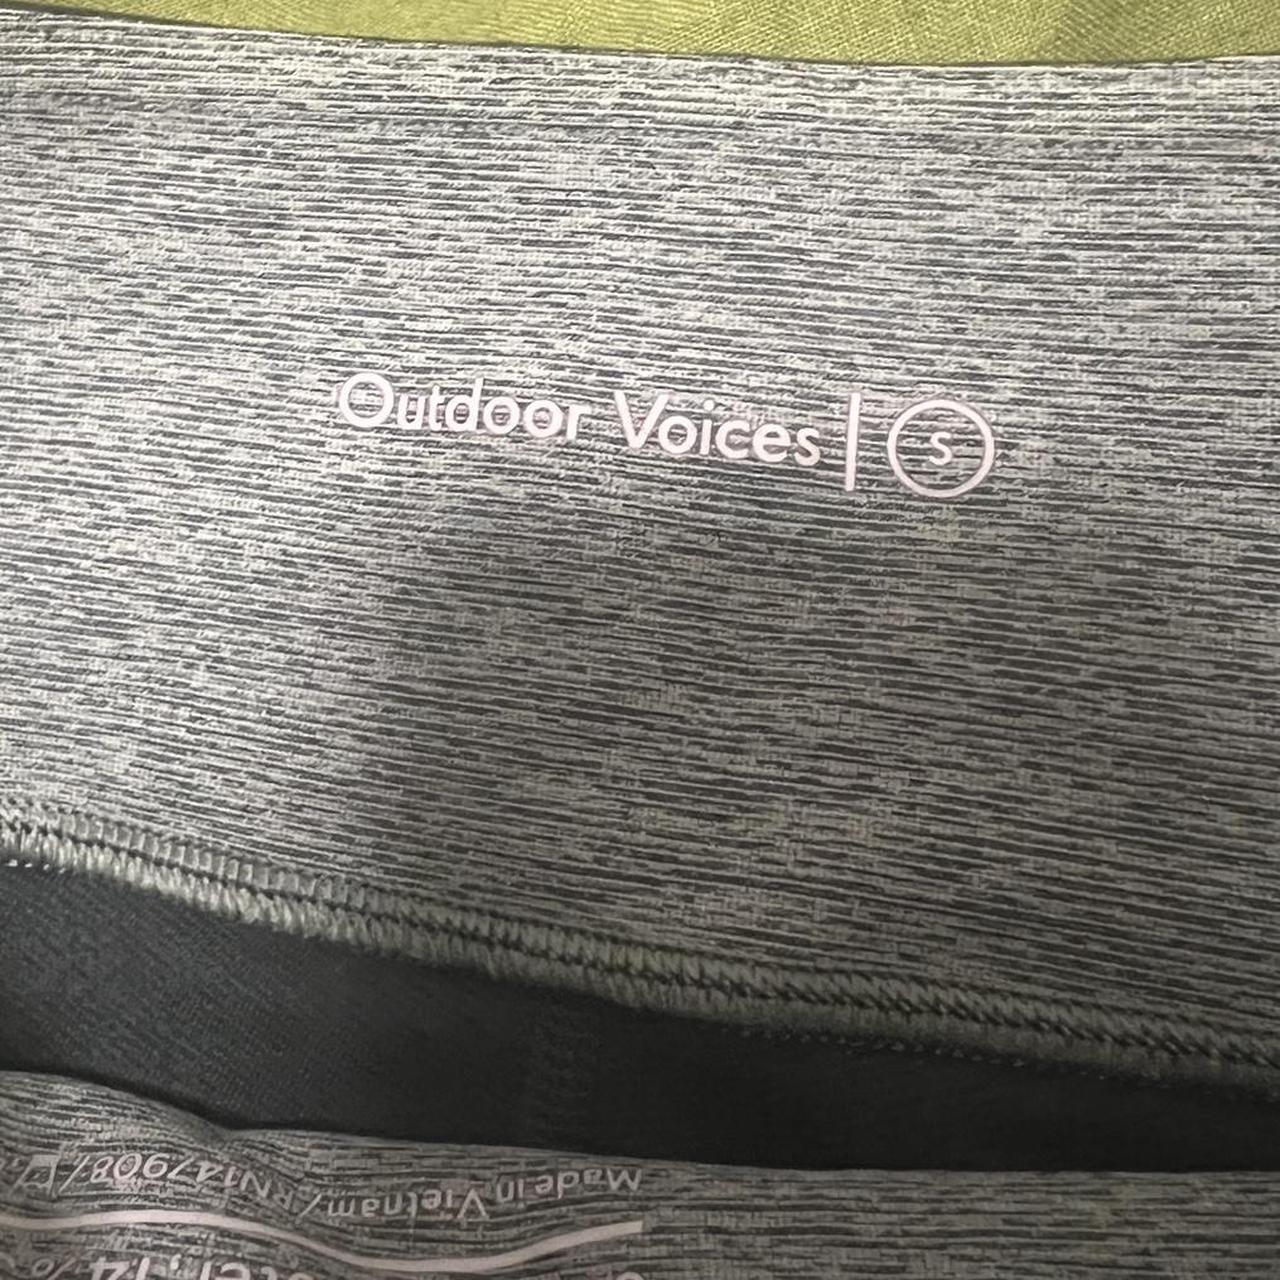 Outdoor Voices 7/8 leggings in blue/grey/black color